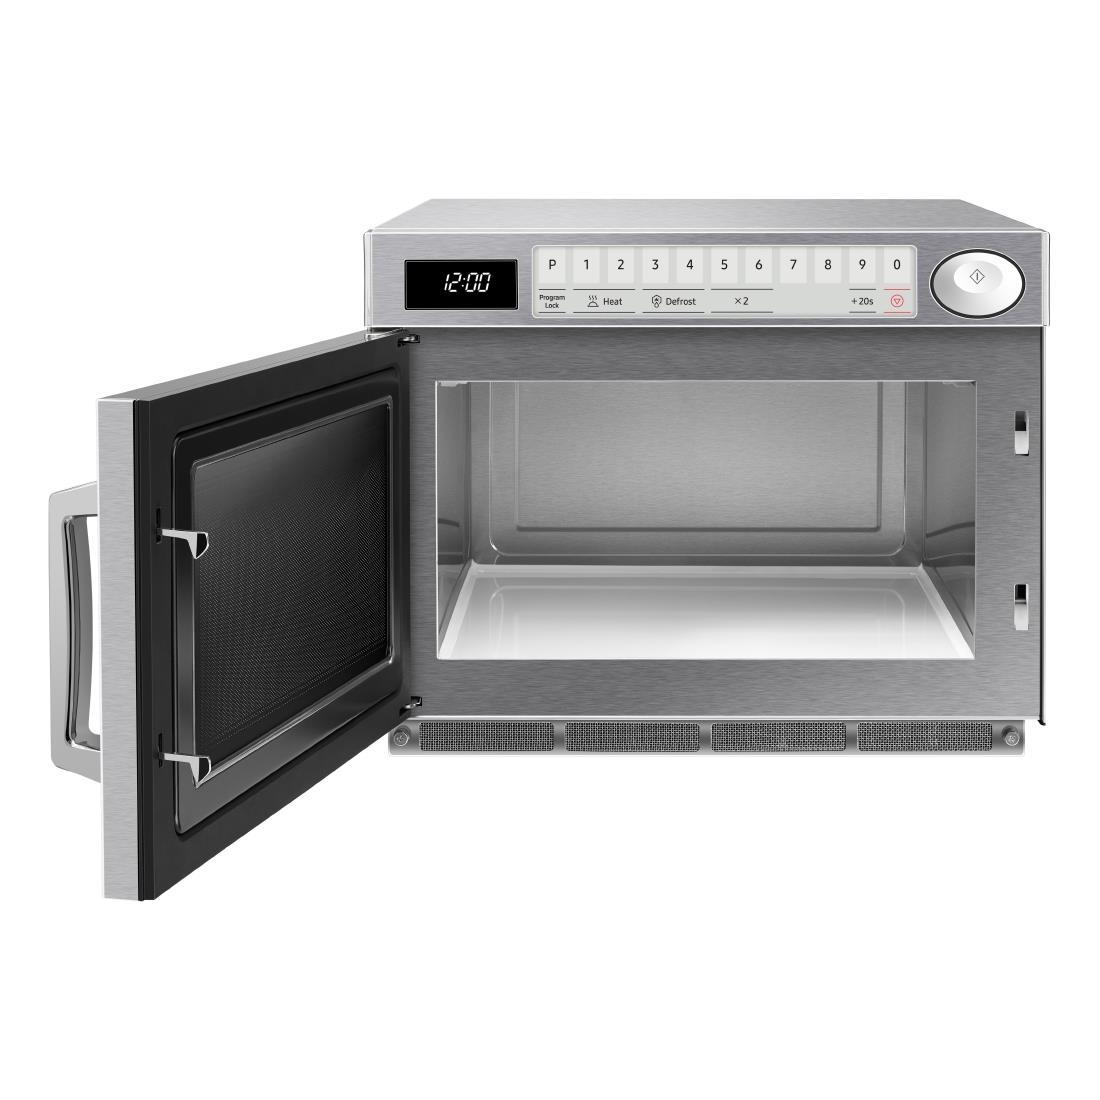 Samsung Commercial Microwave Digital 26Ltr 1000W - FS319  - 3